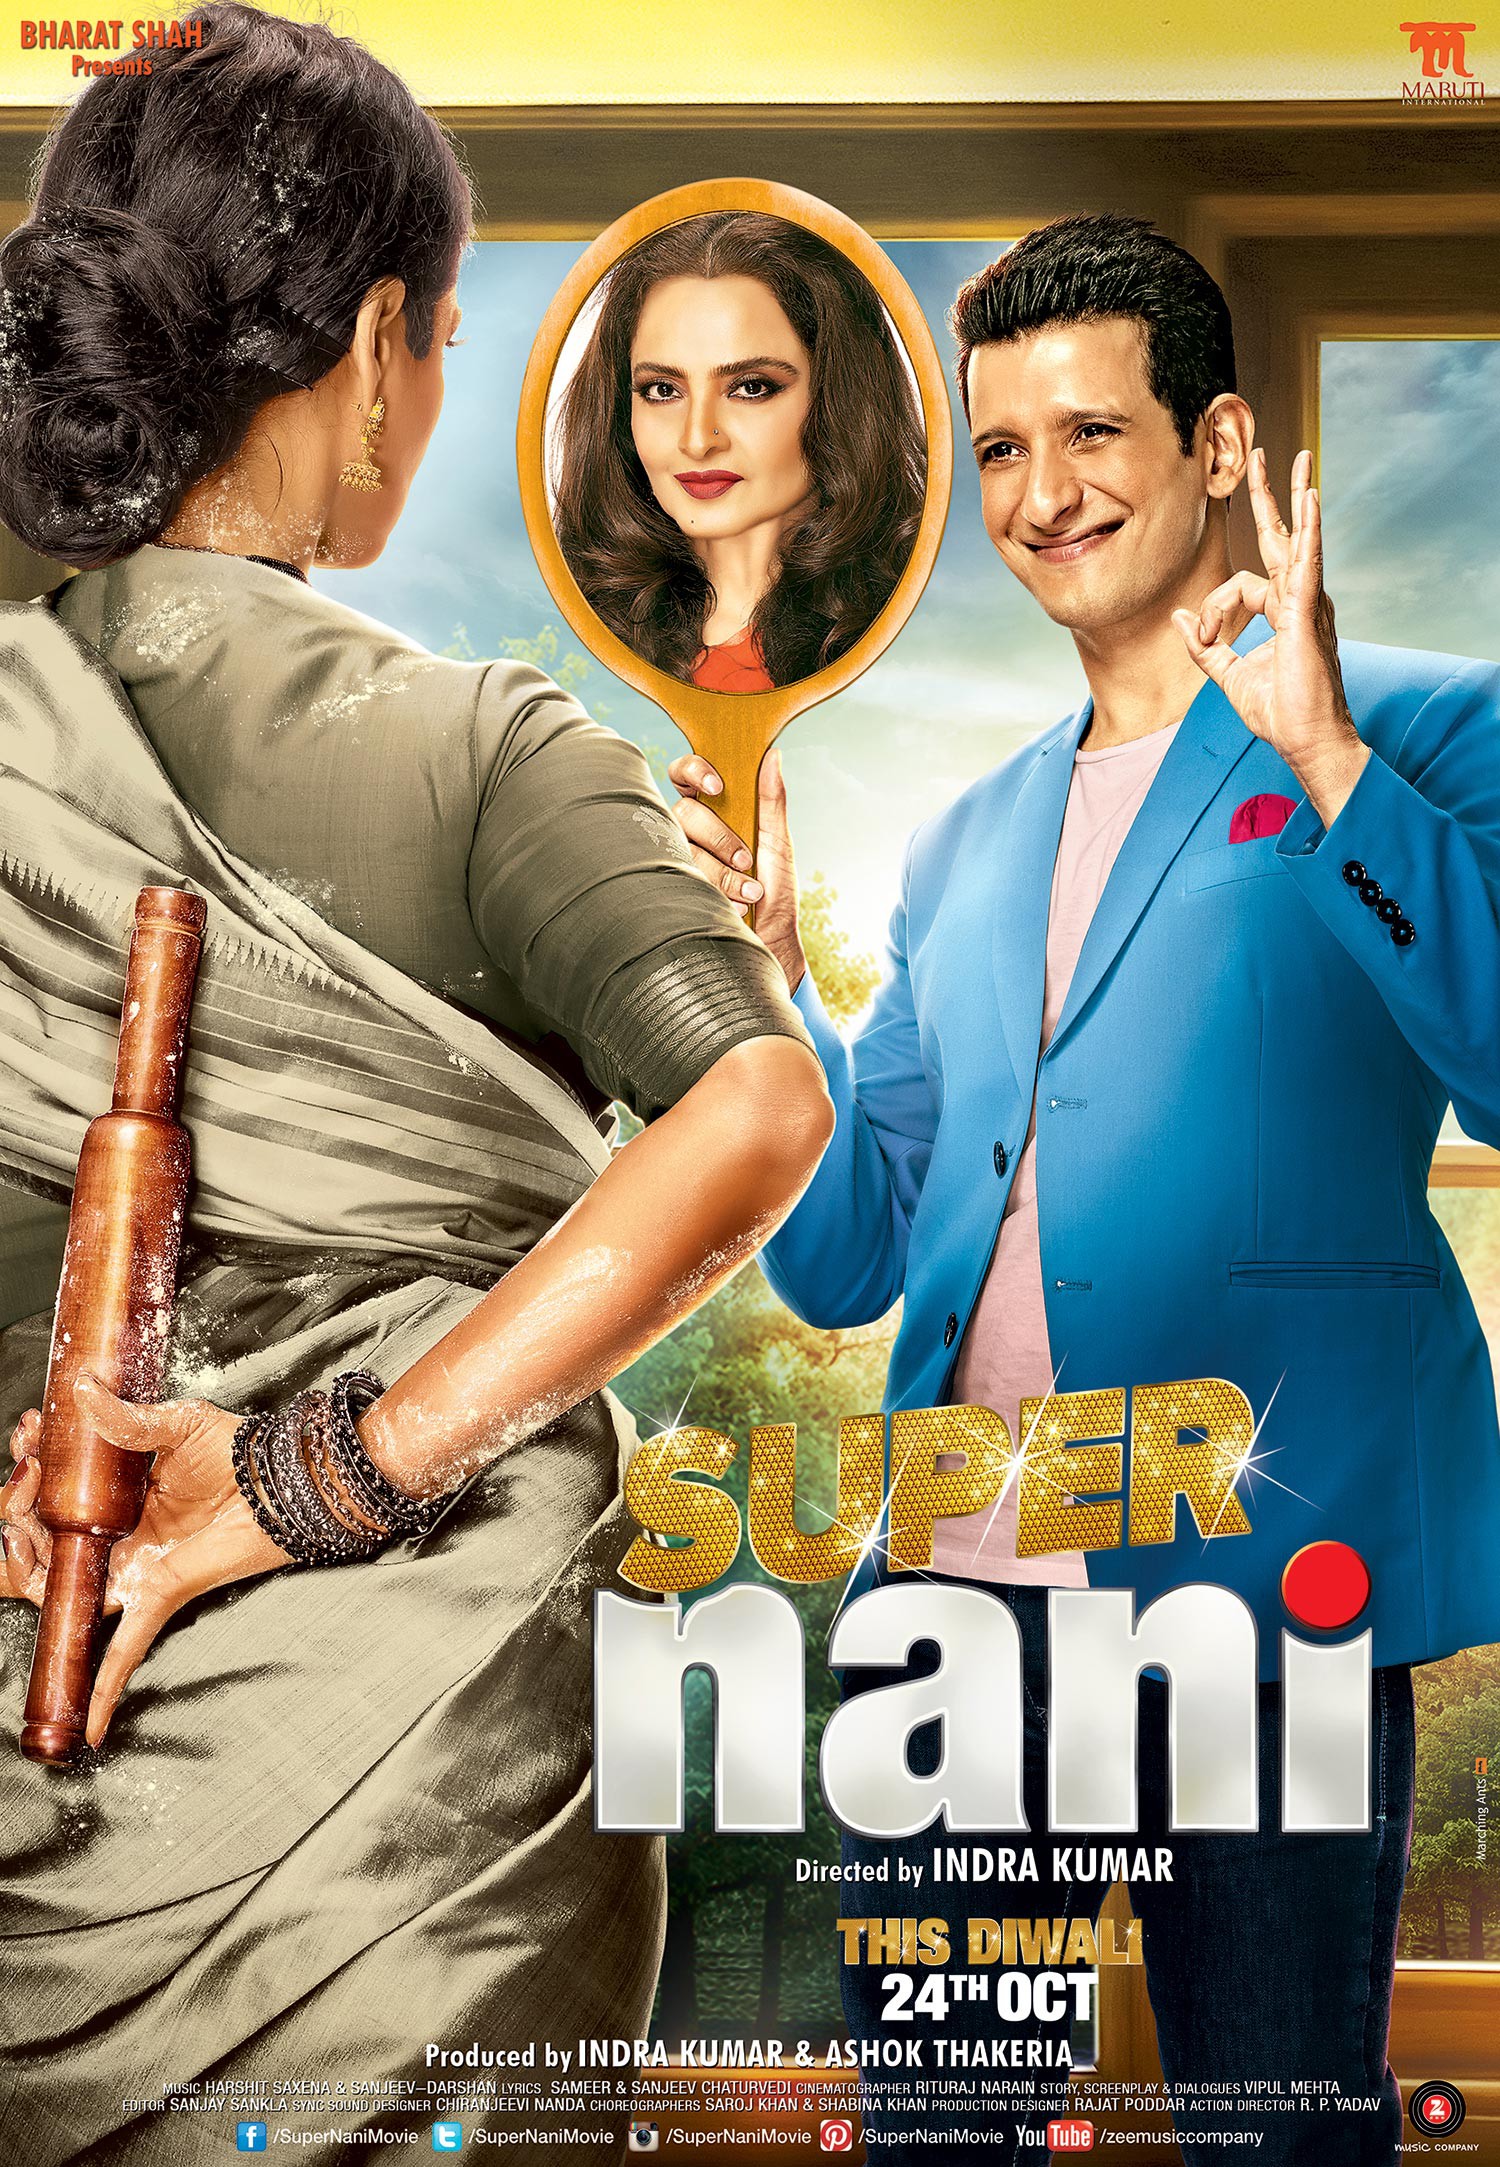 Super Nani 2014 Hindi Full Movie 1080p 720p 480p HDRip Free Download